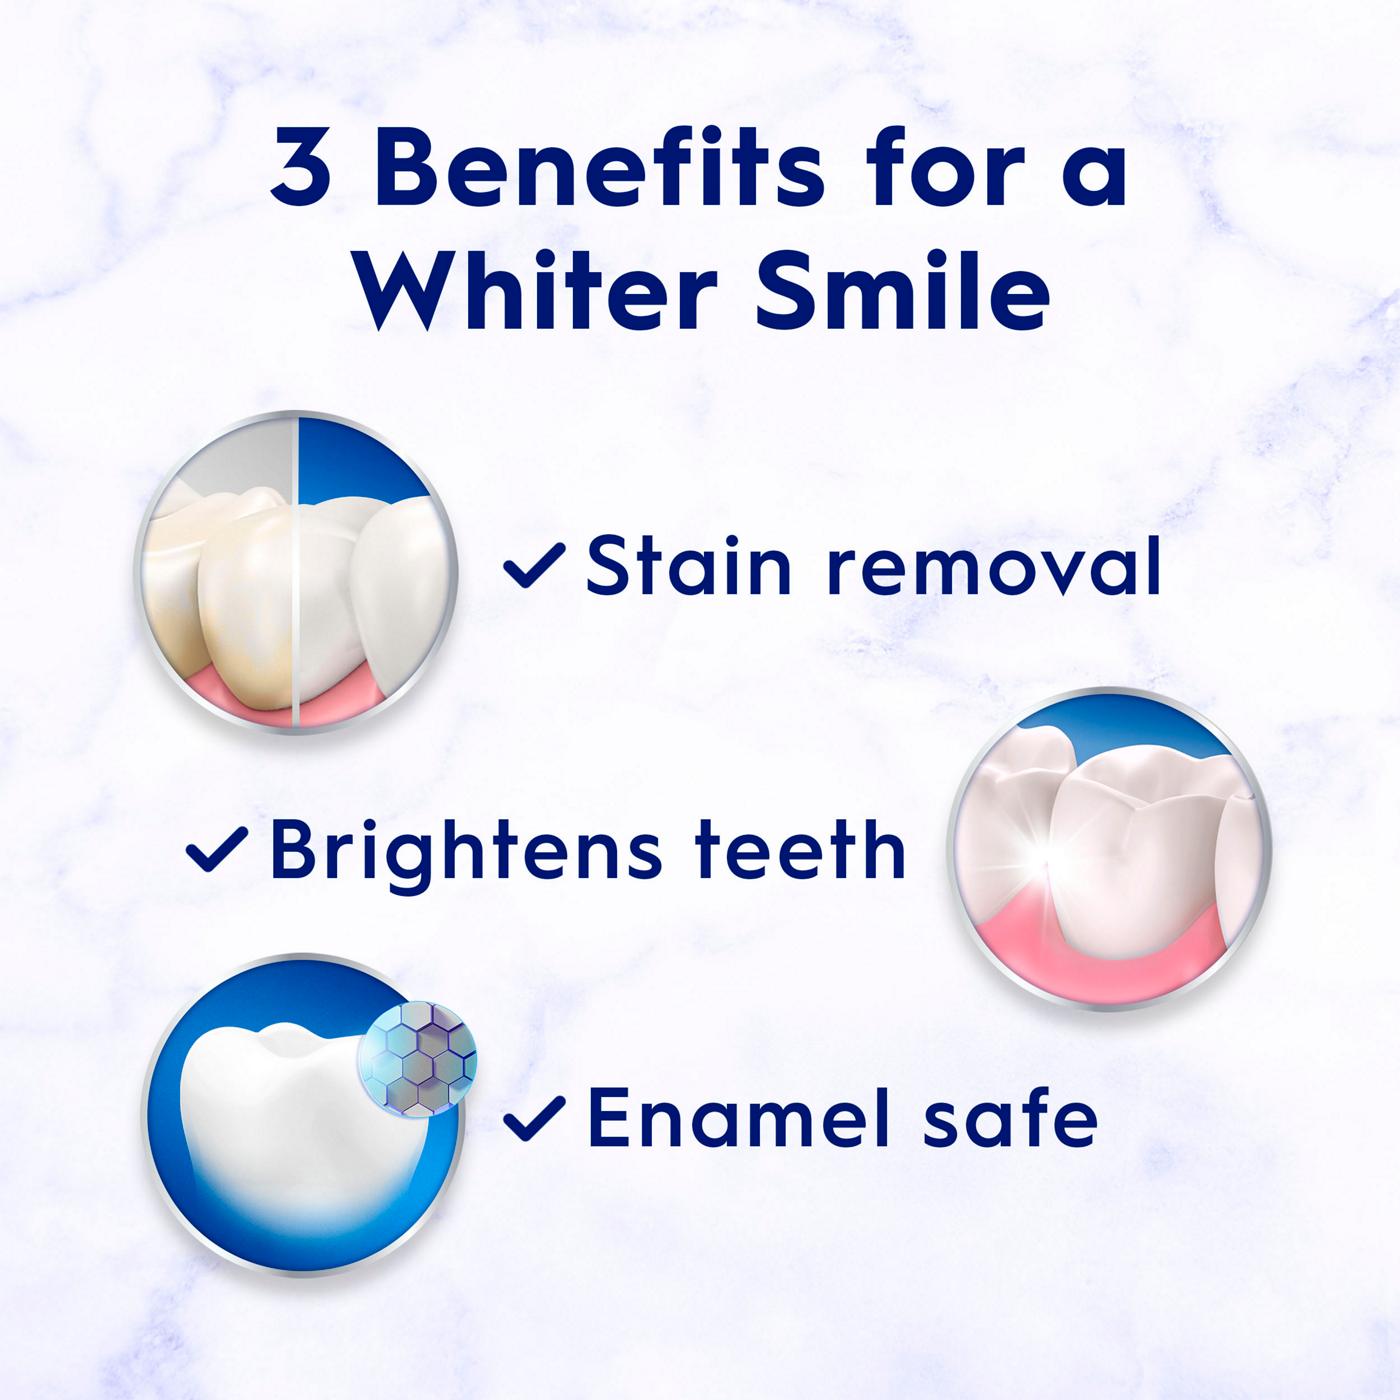 Crest 3D White Advanced Toothpaste - Glamorous White; image 8 of 8